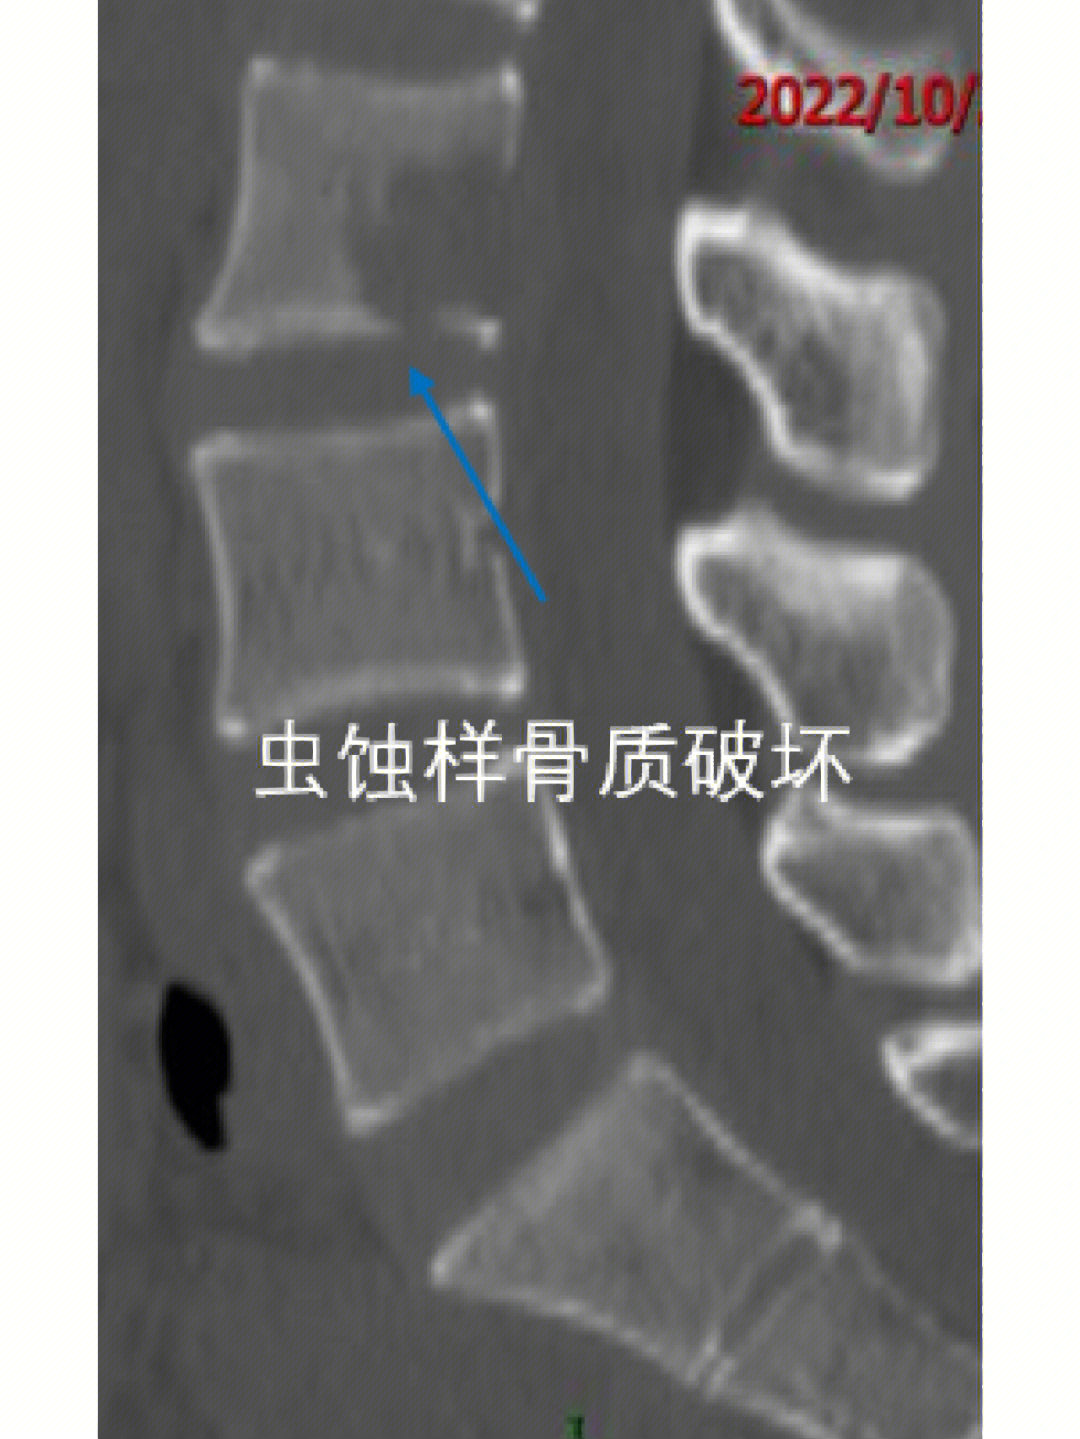 ct74l3椎体后下部可见溶骨性骨质破坏区并软组织肿块影,骨质破坏